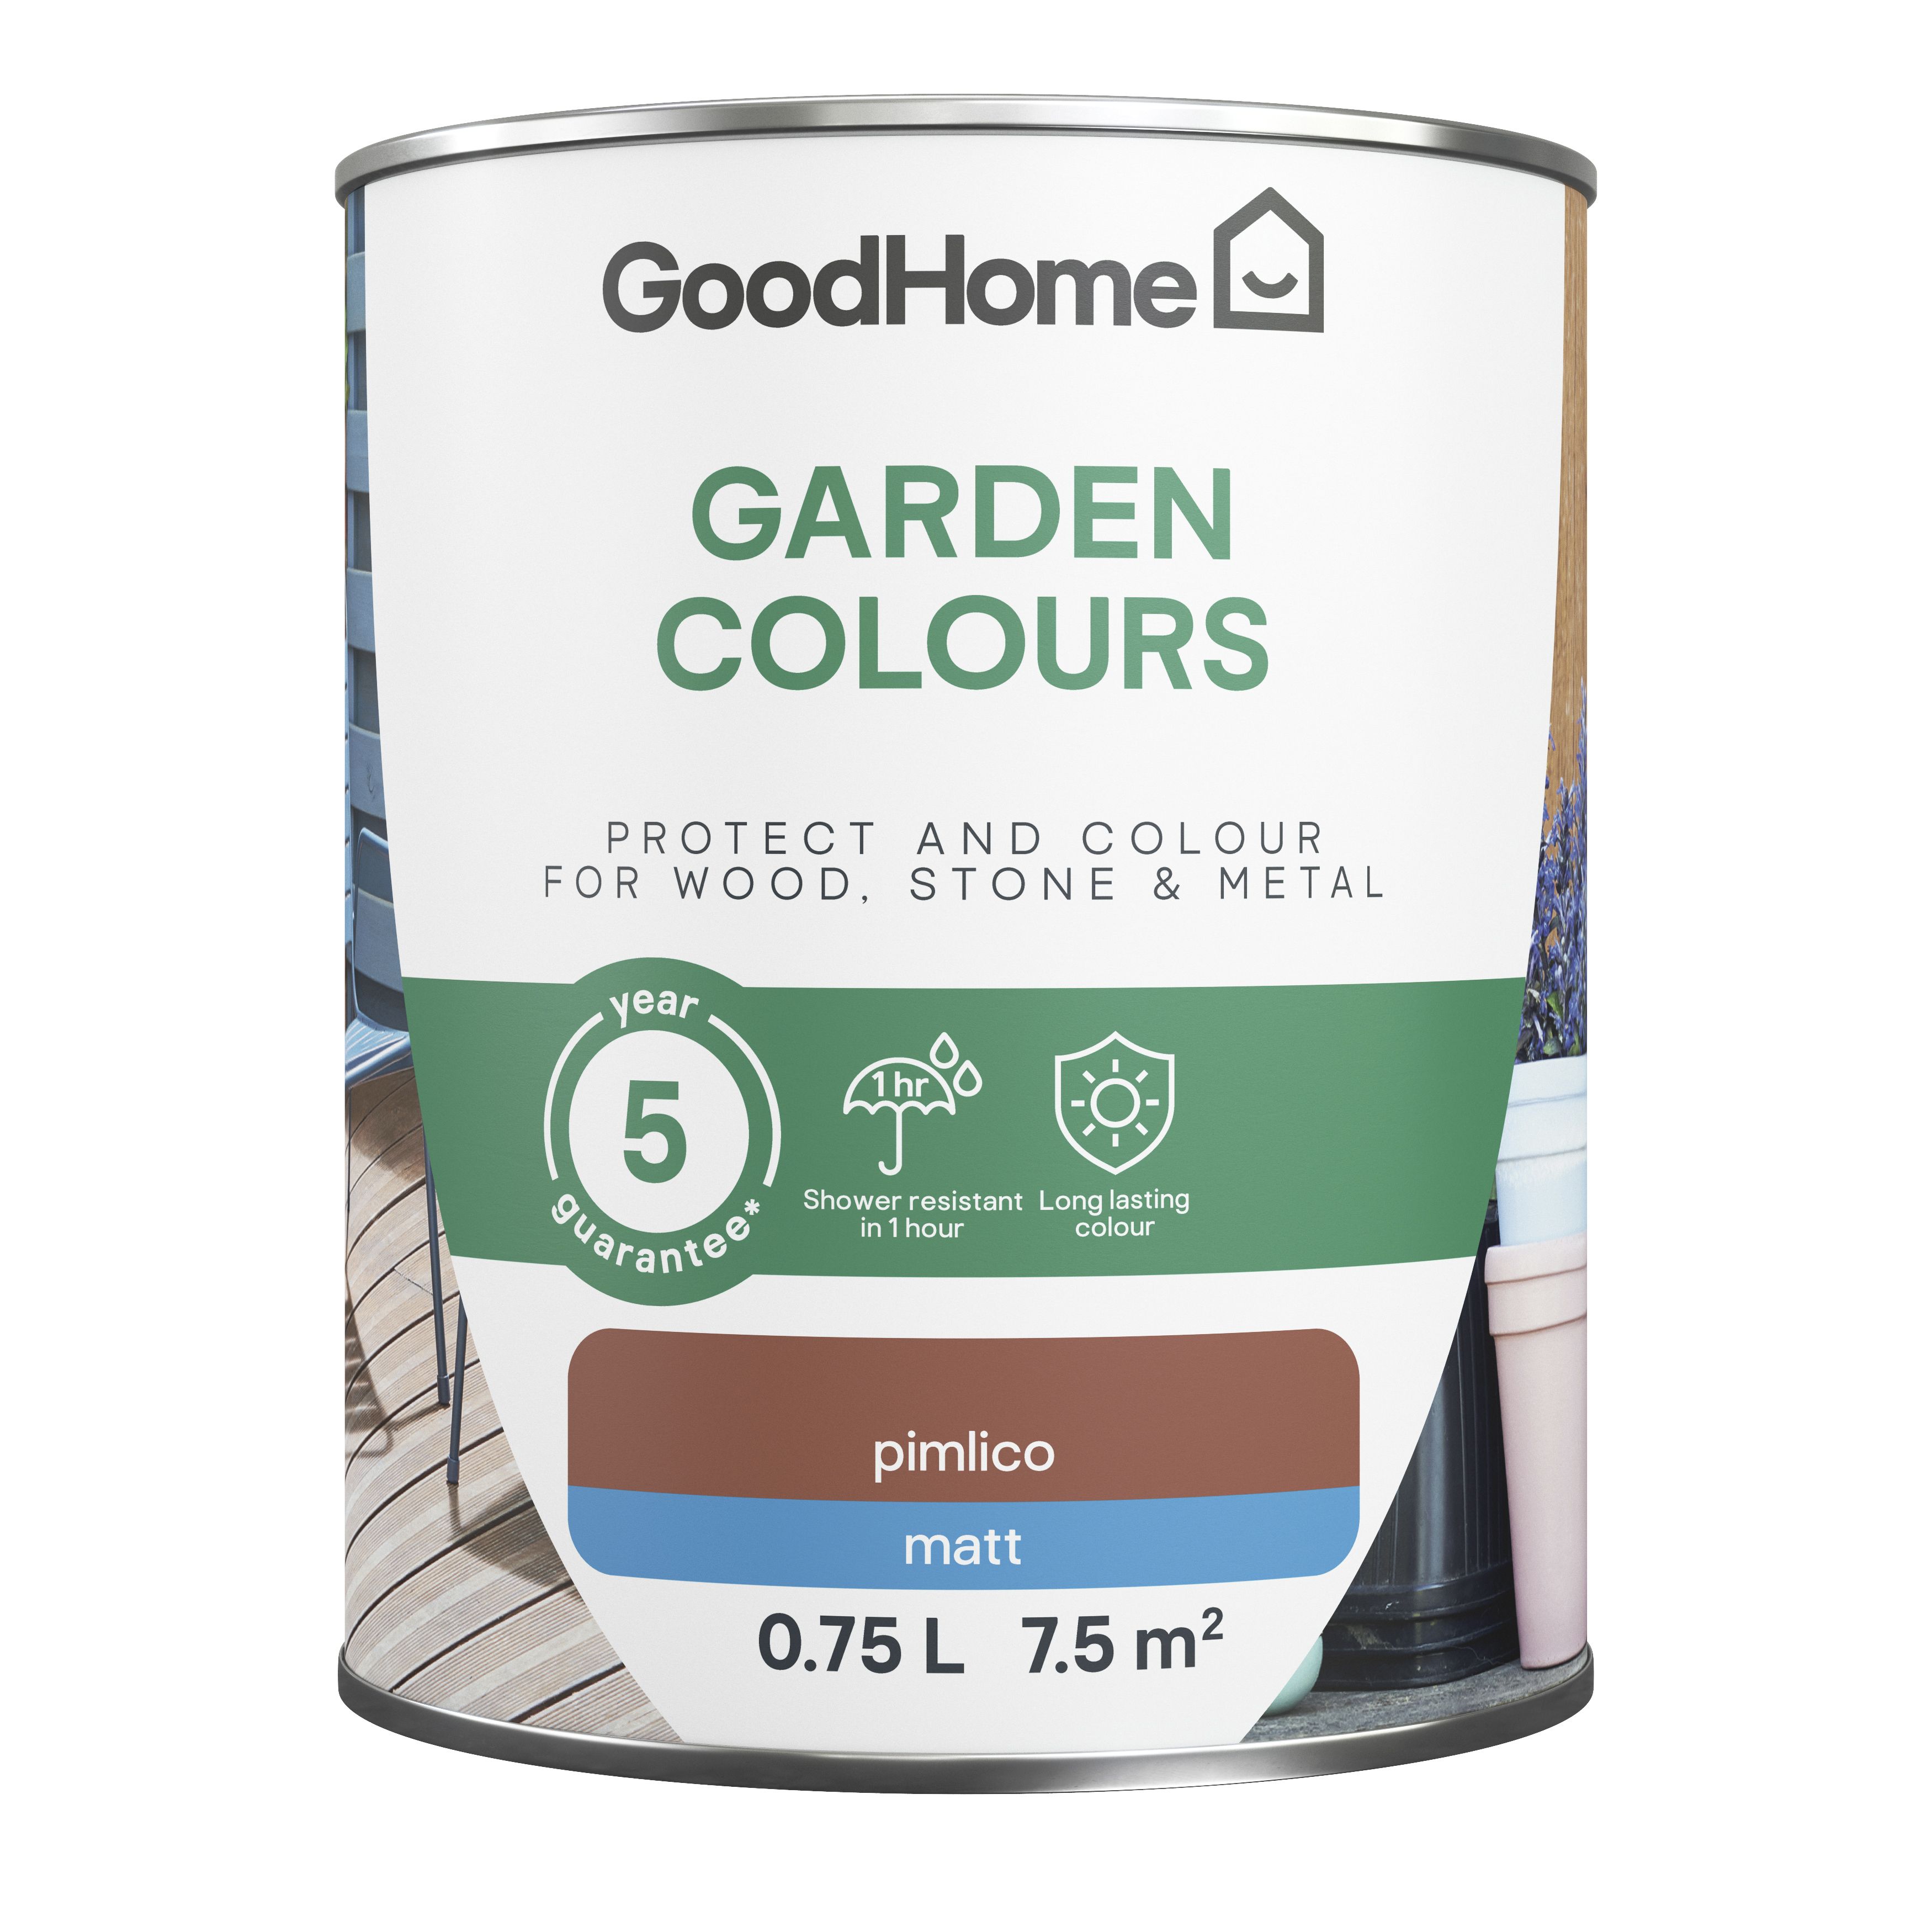 GoodHome Colour It Pimlico Matt Multi-surface paint, 750ml